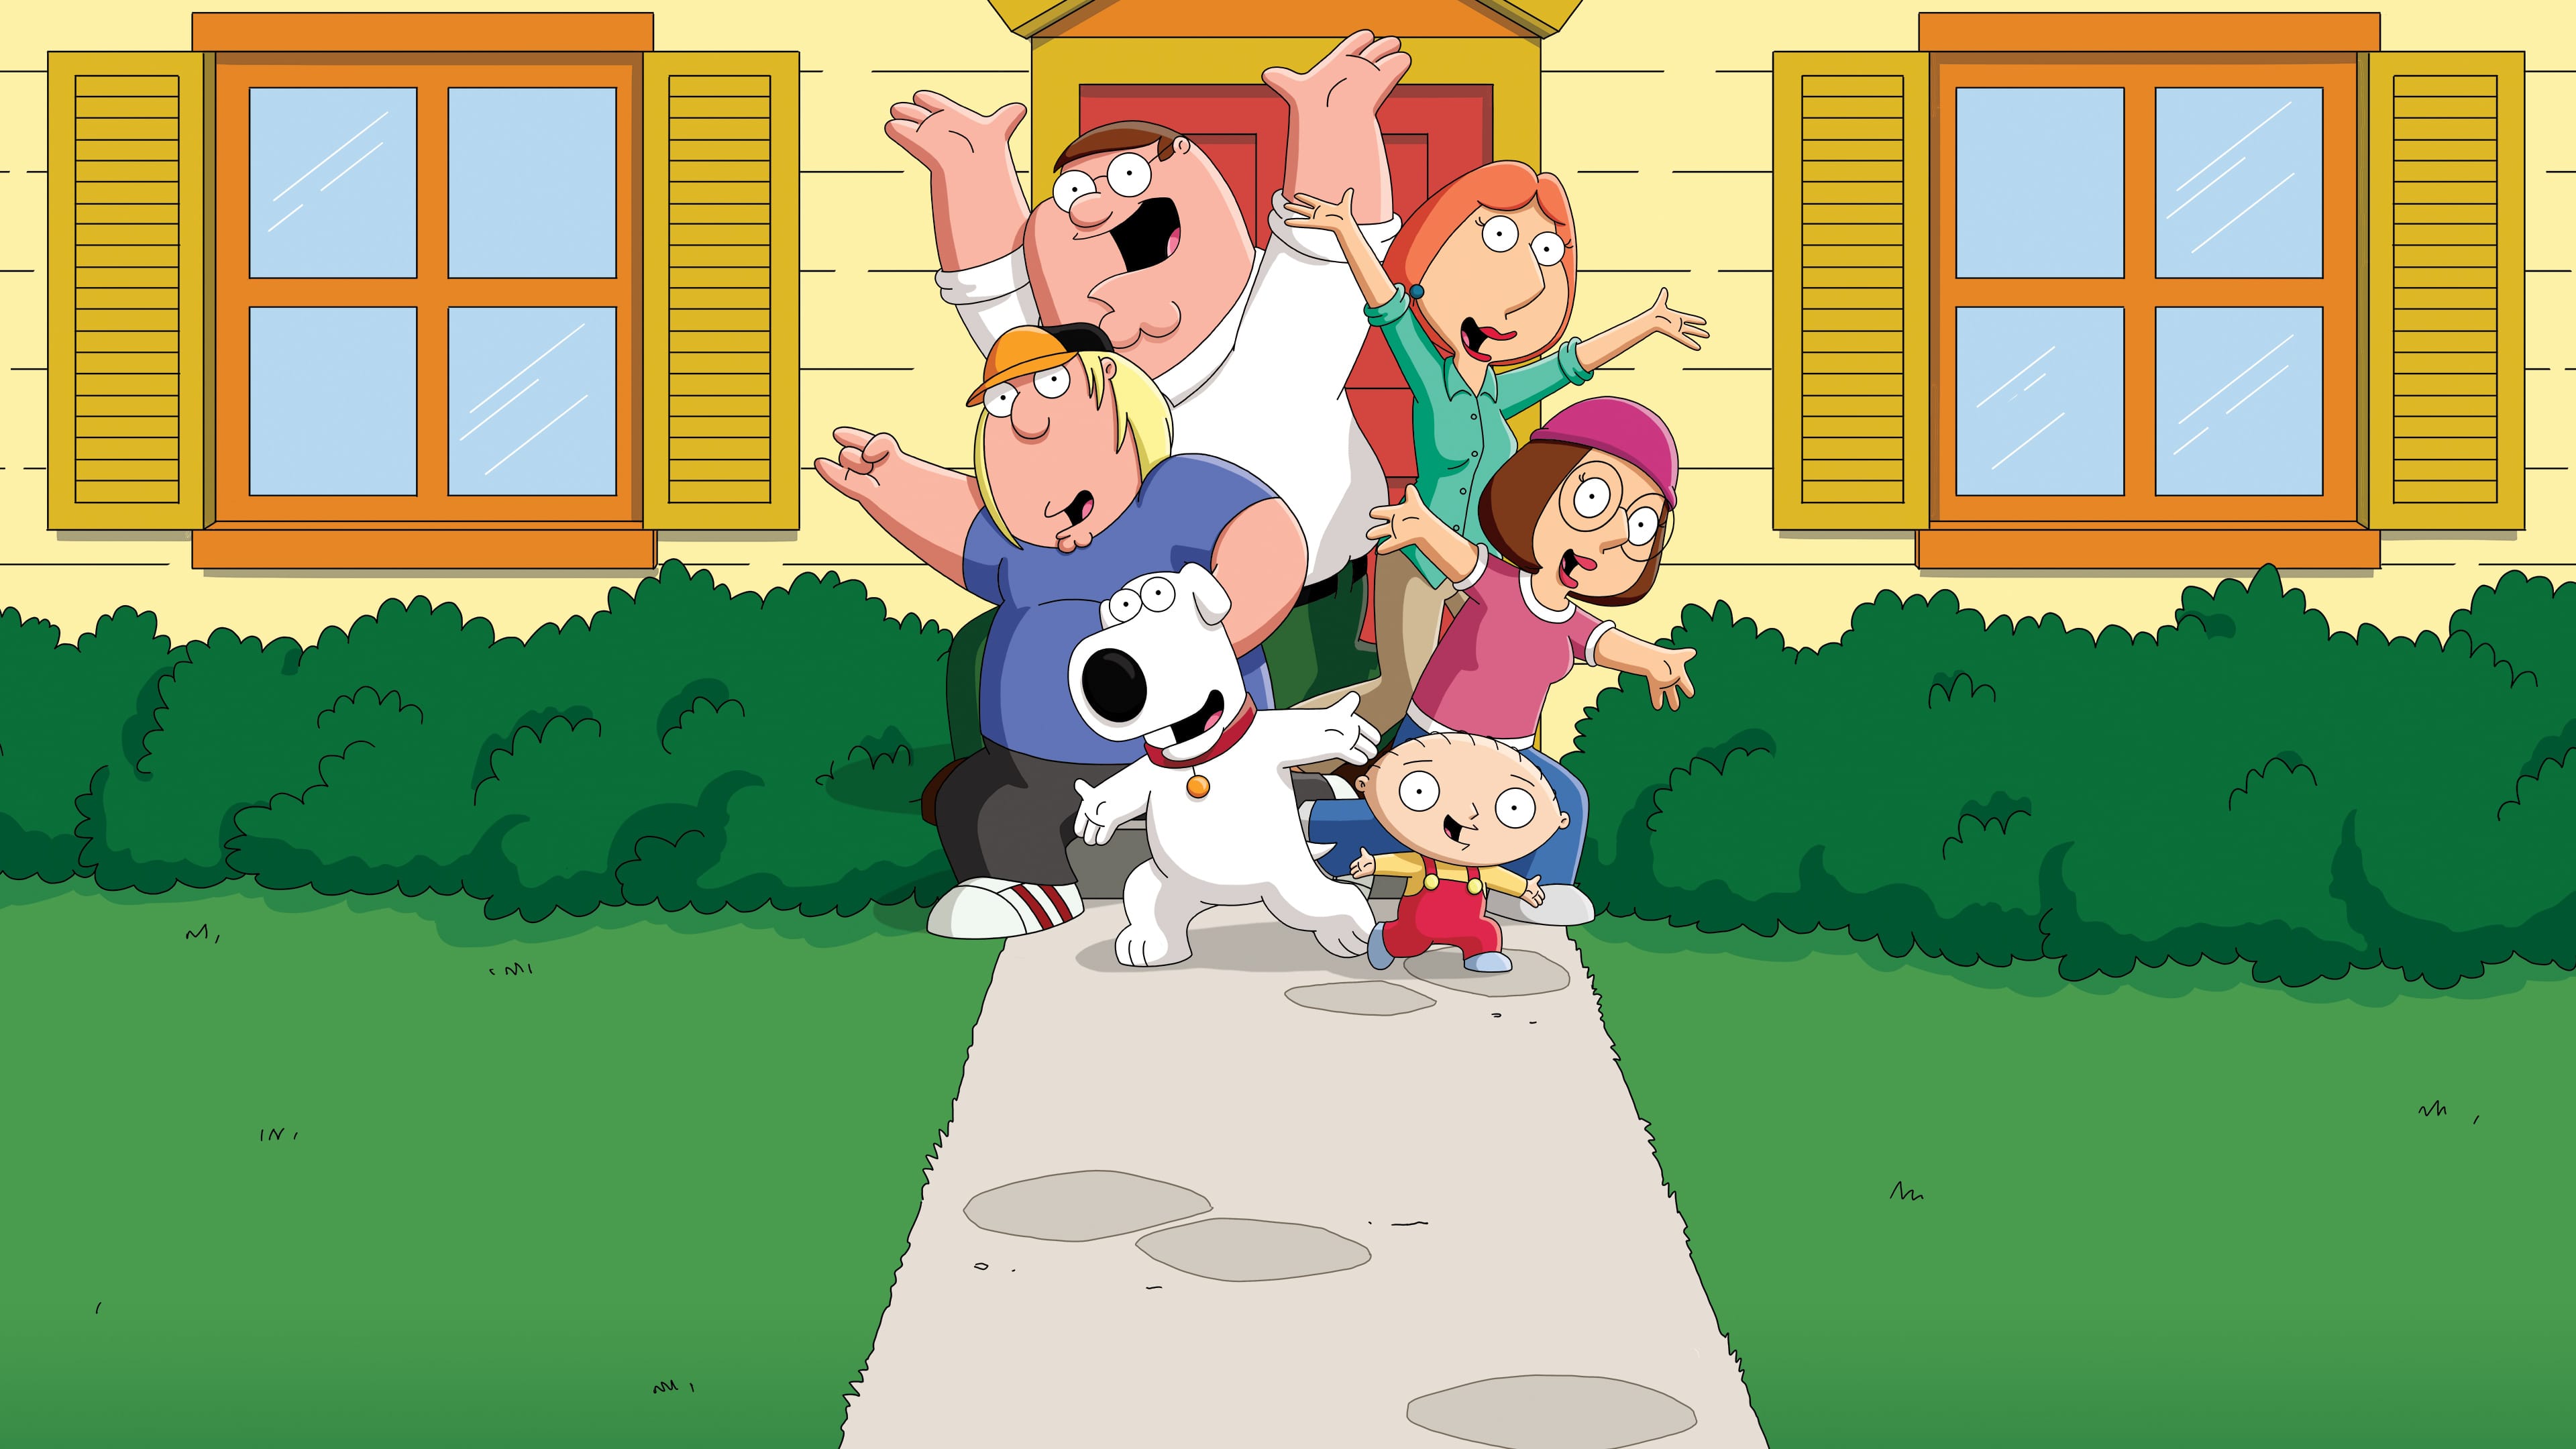 bappaditya banerjee recommends Watch Family Guyonline For Free